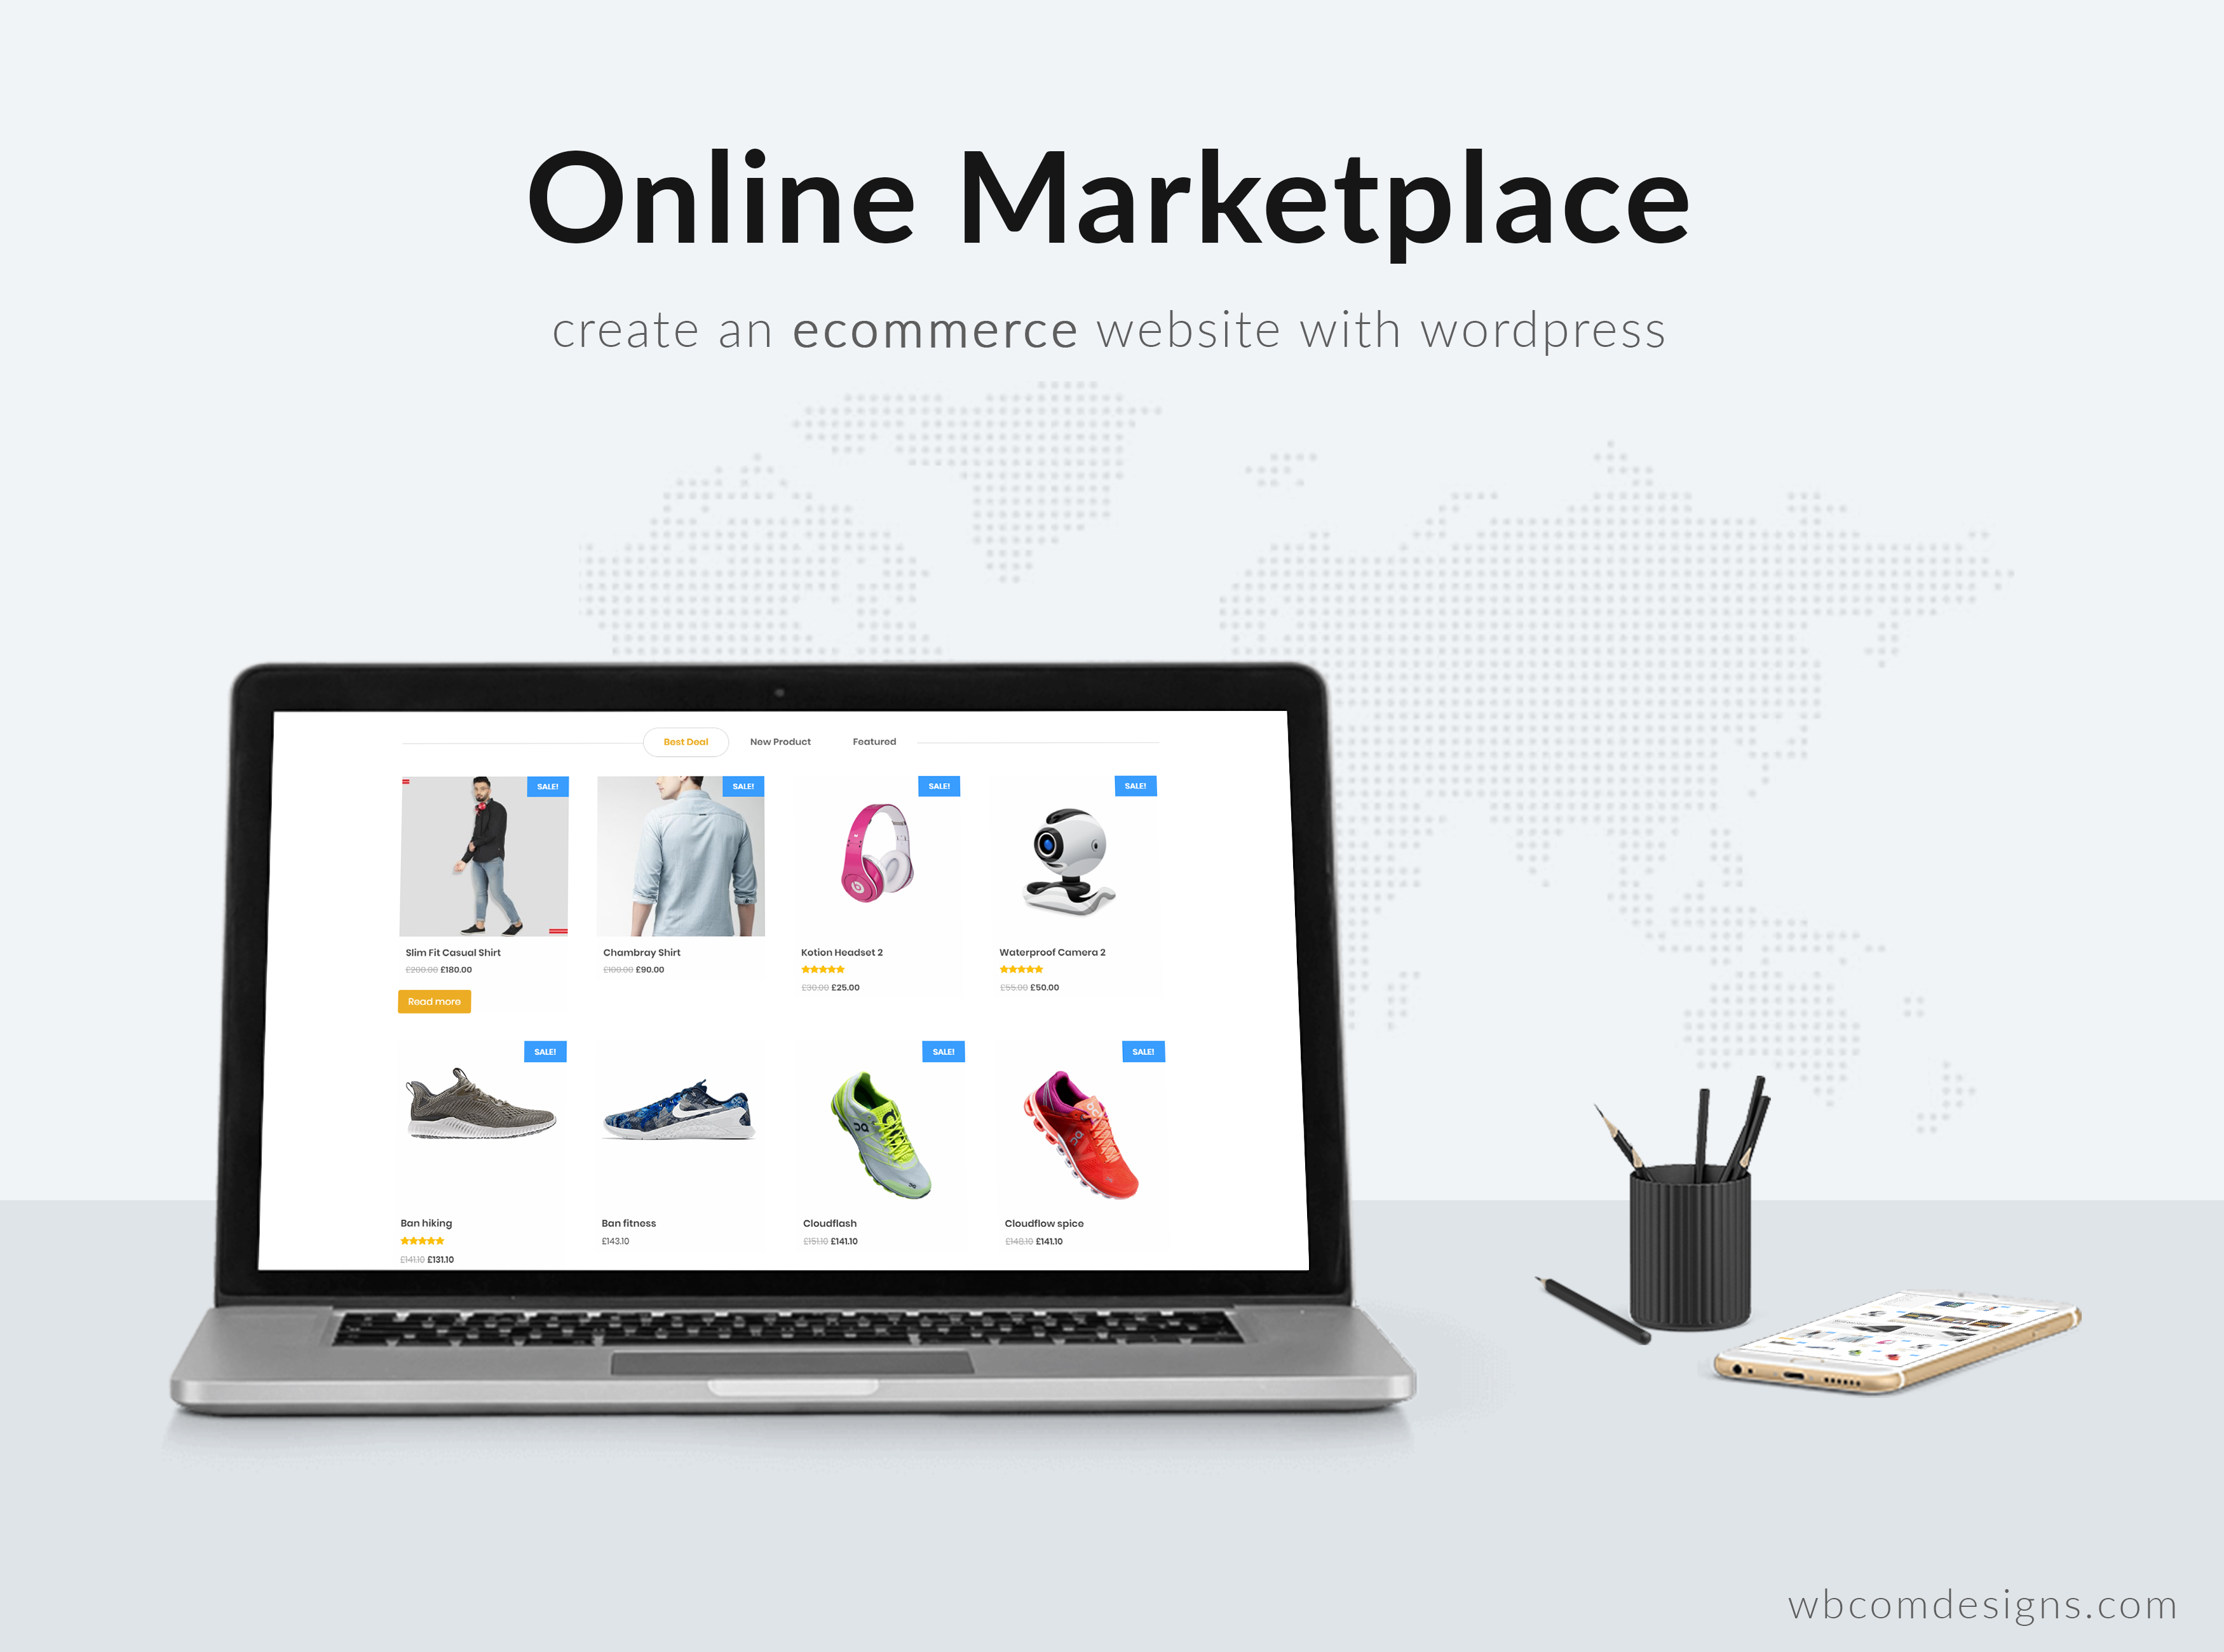 online marketplace